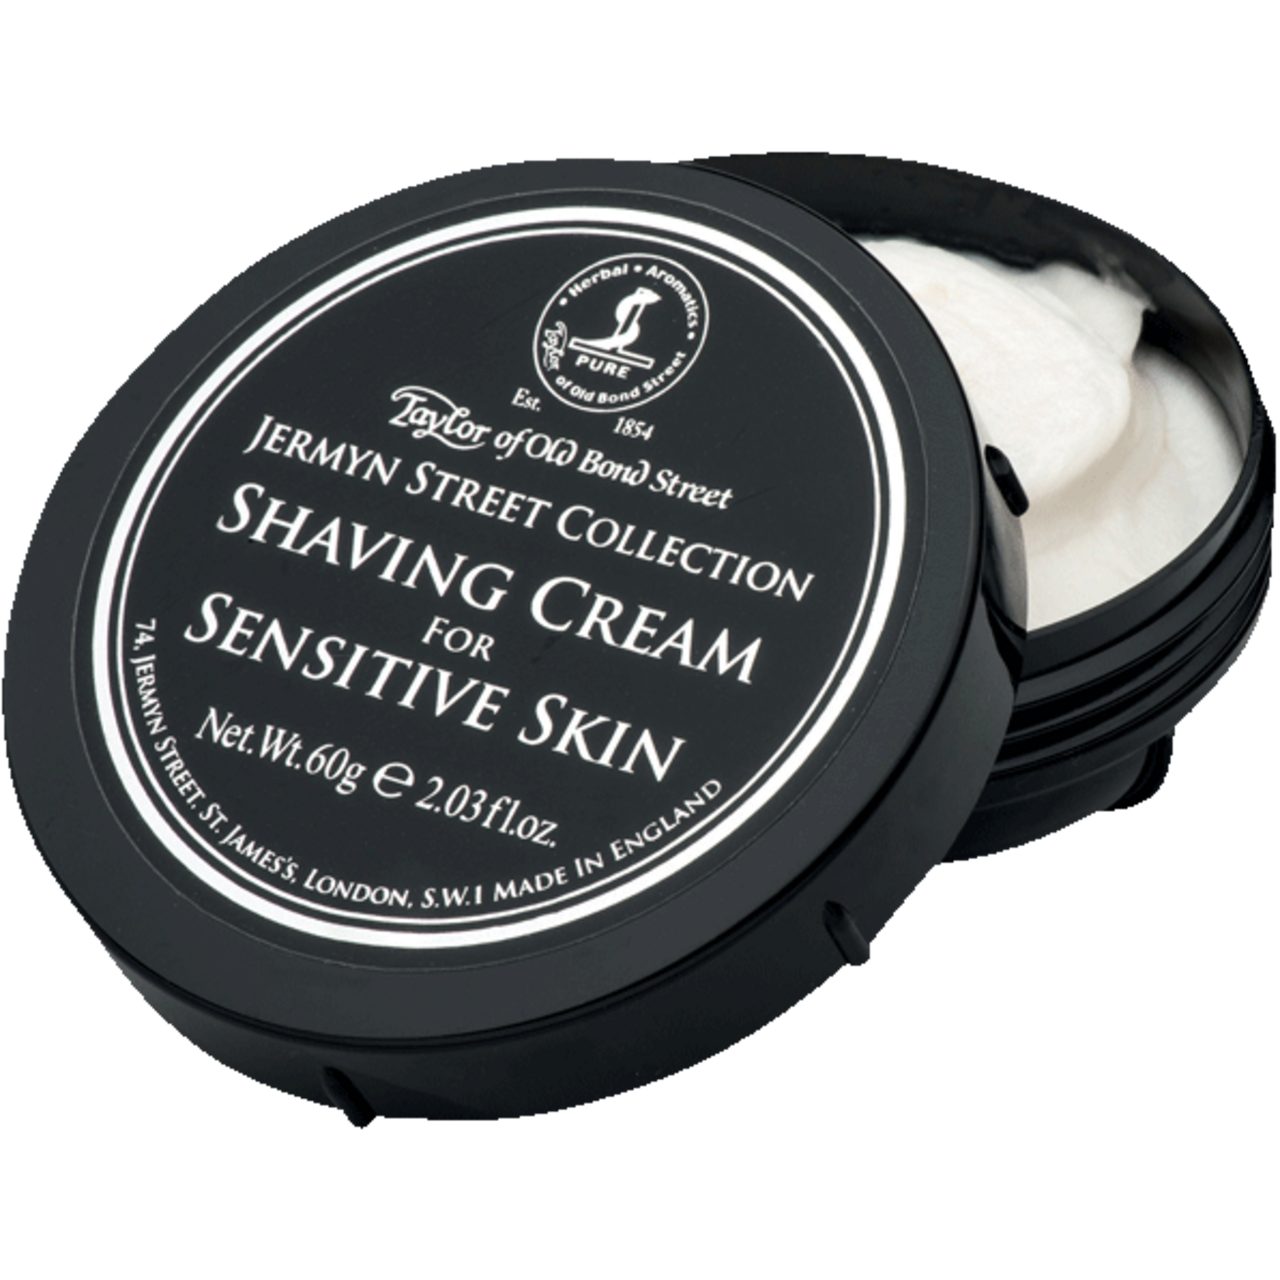 Street Skin Rasiercreme Taylor Cream sensitive Bond Collection Street Shaving Jermyn for of Old